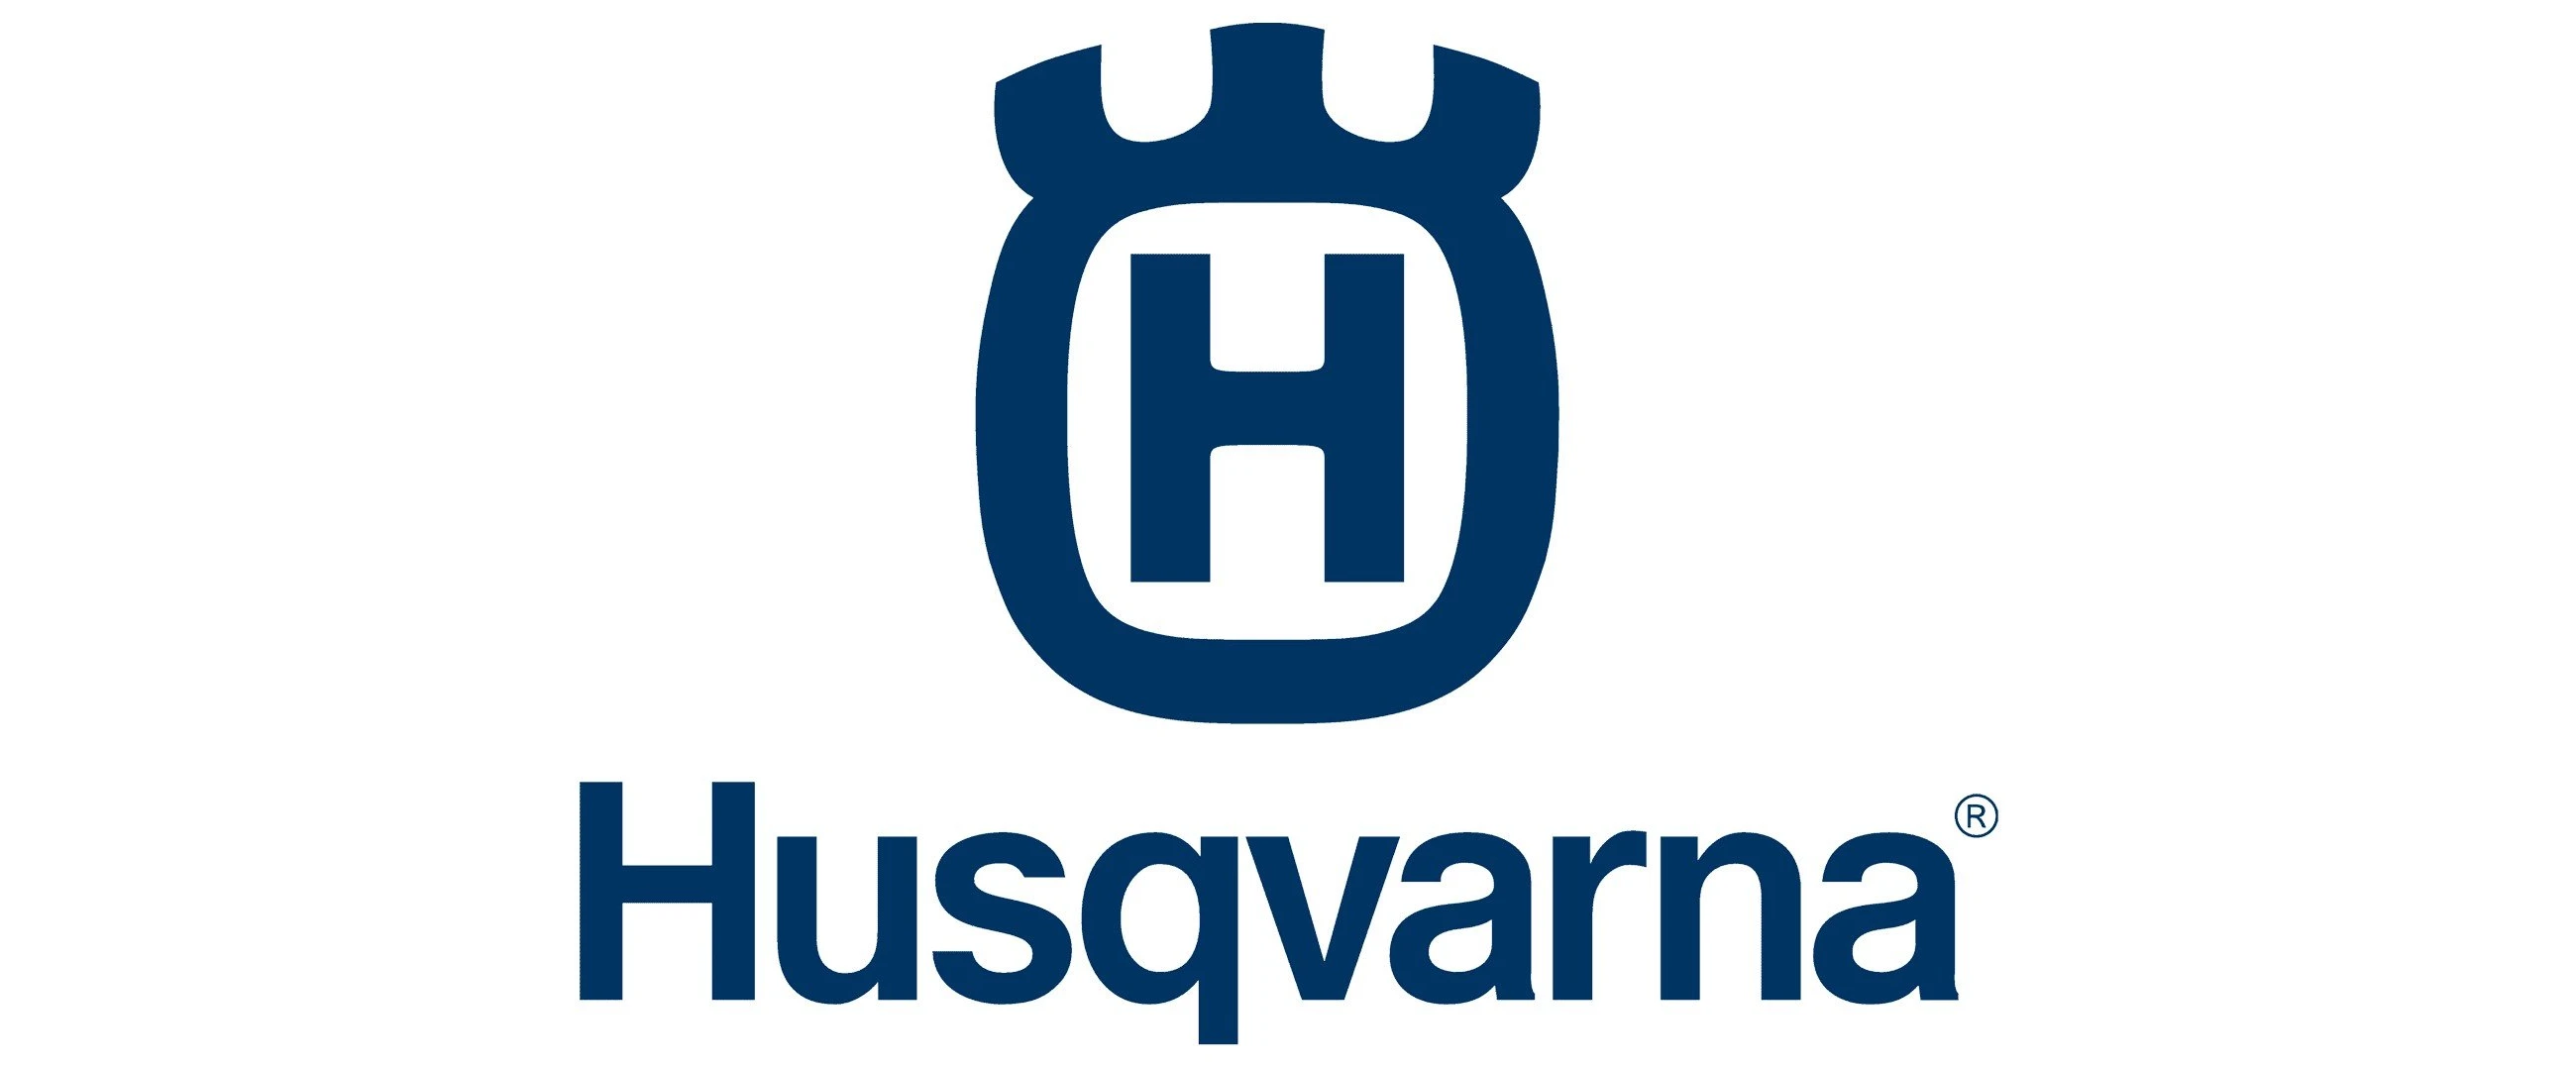 logo for husqvarna